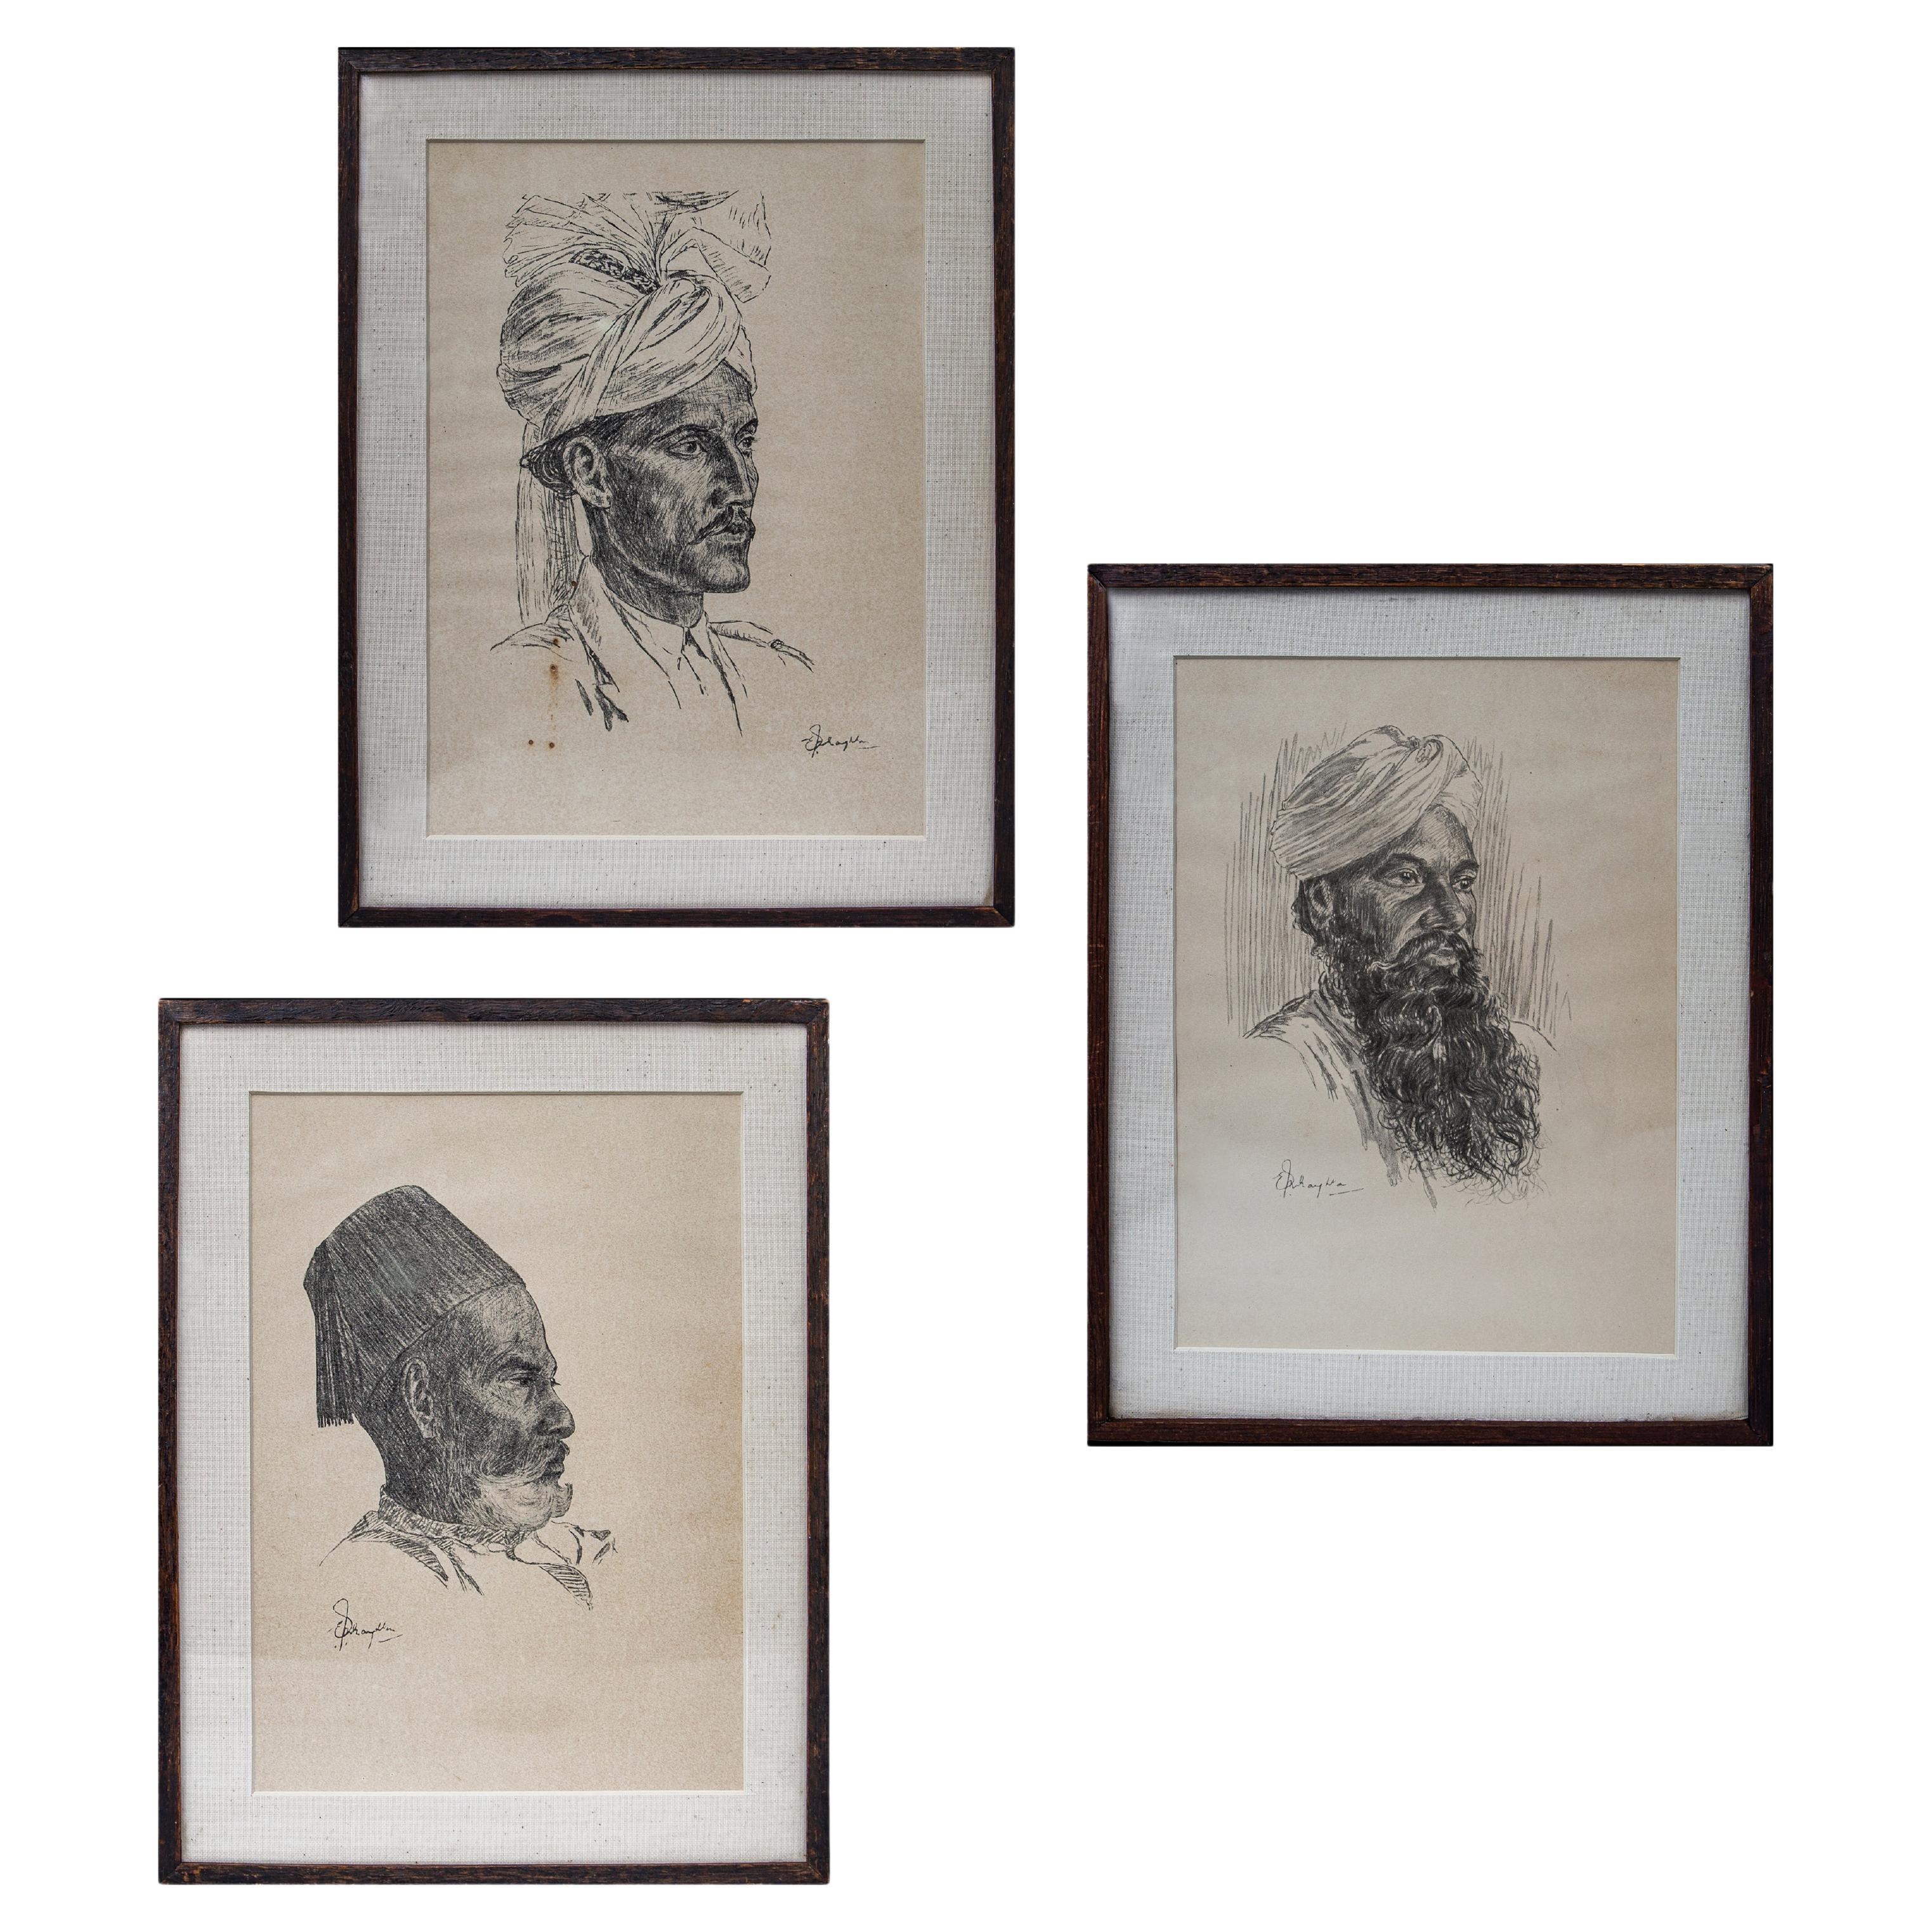 3 framed & signed pencil drawings of Indian gentlemen in regional dress, 19th C